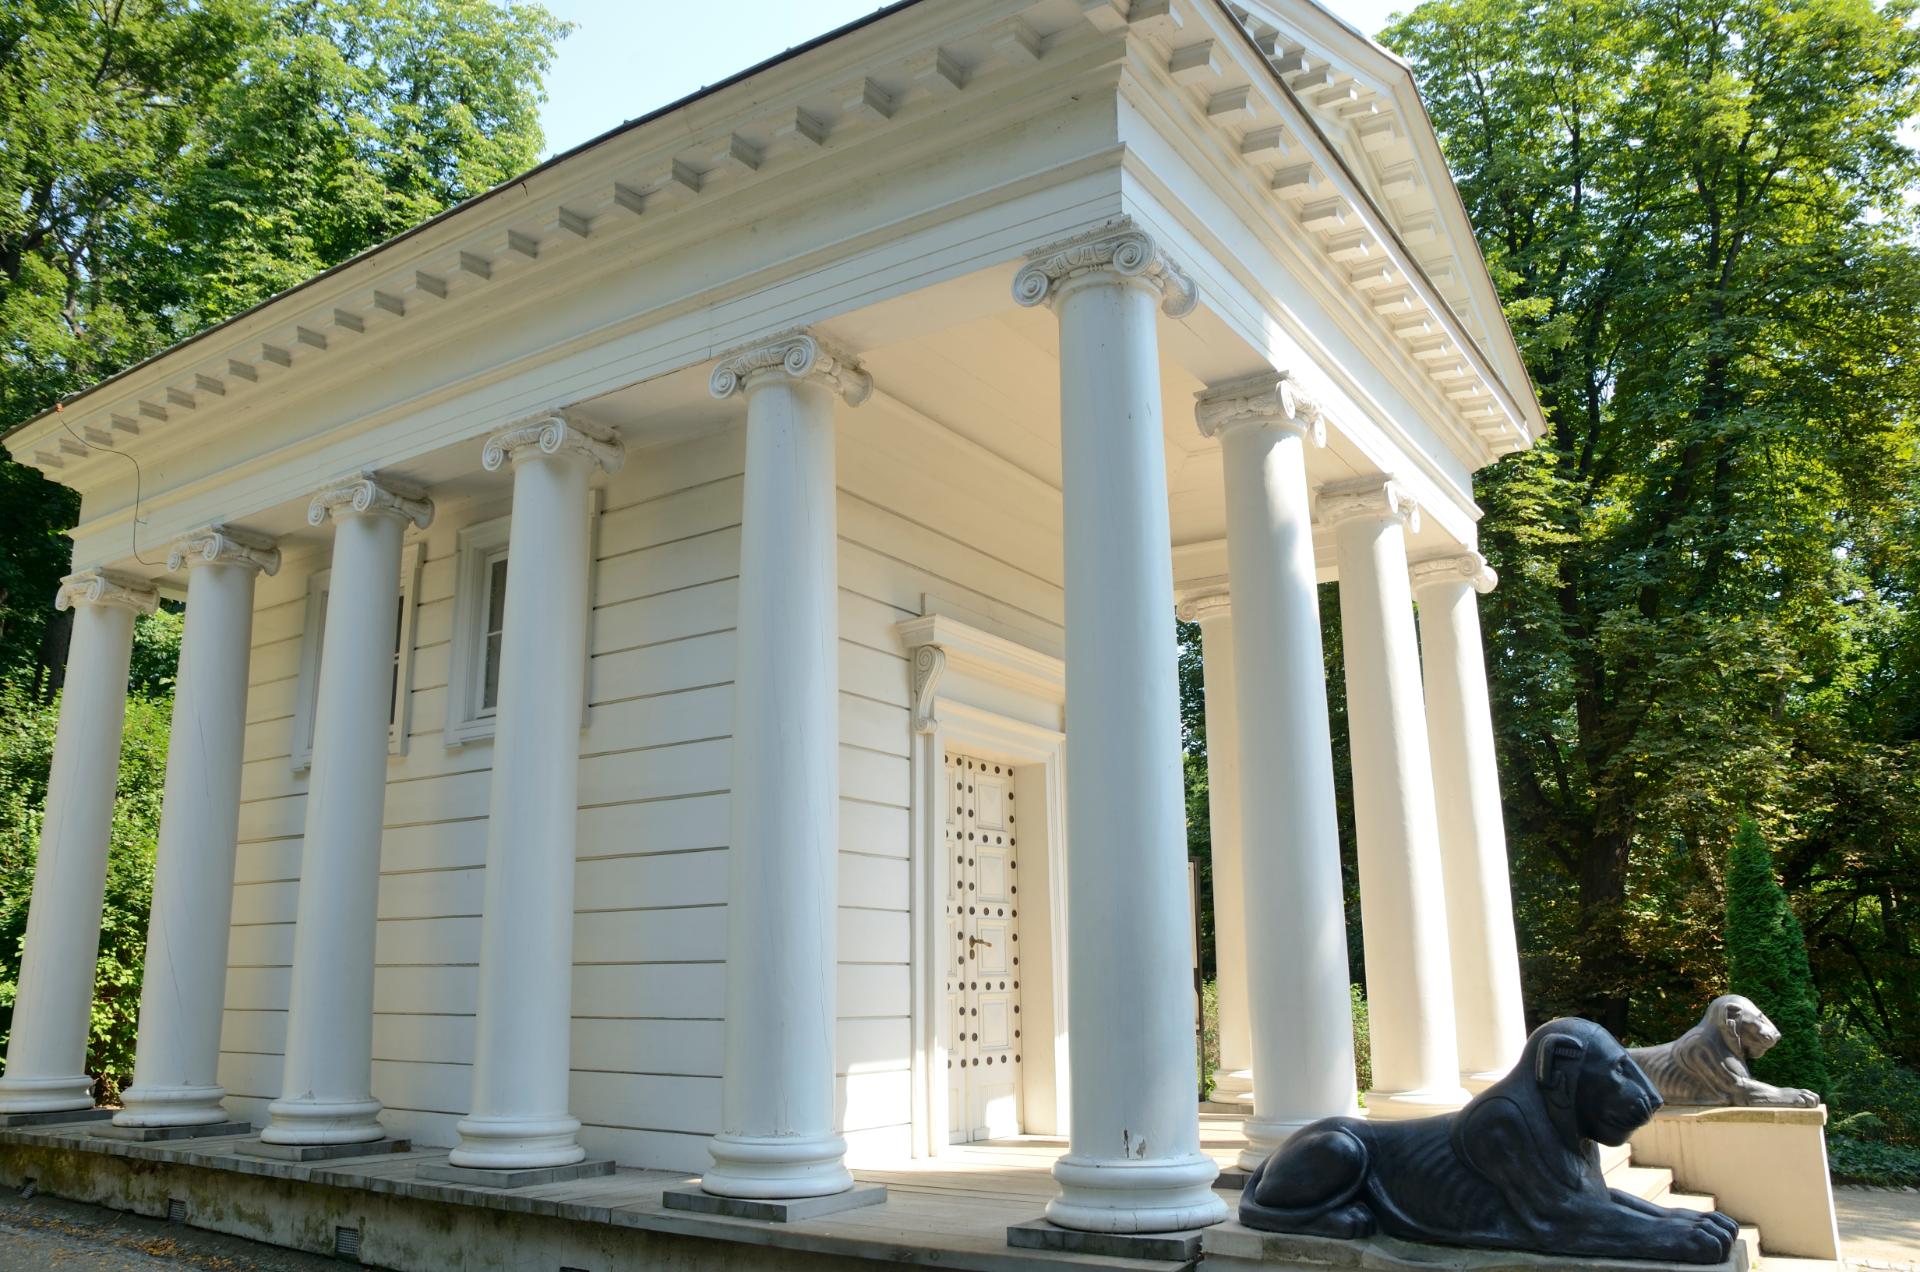 White temple column